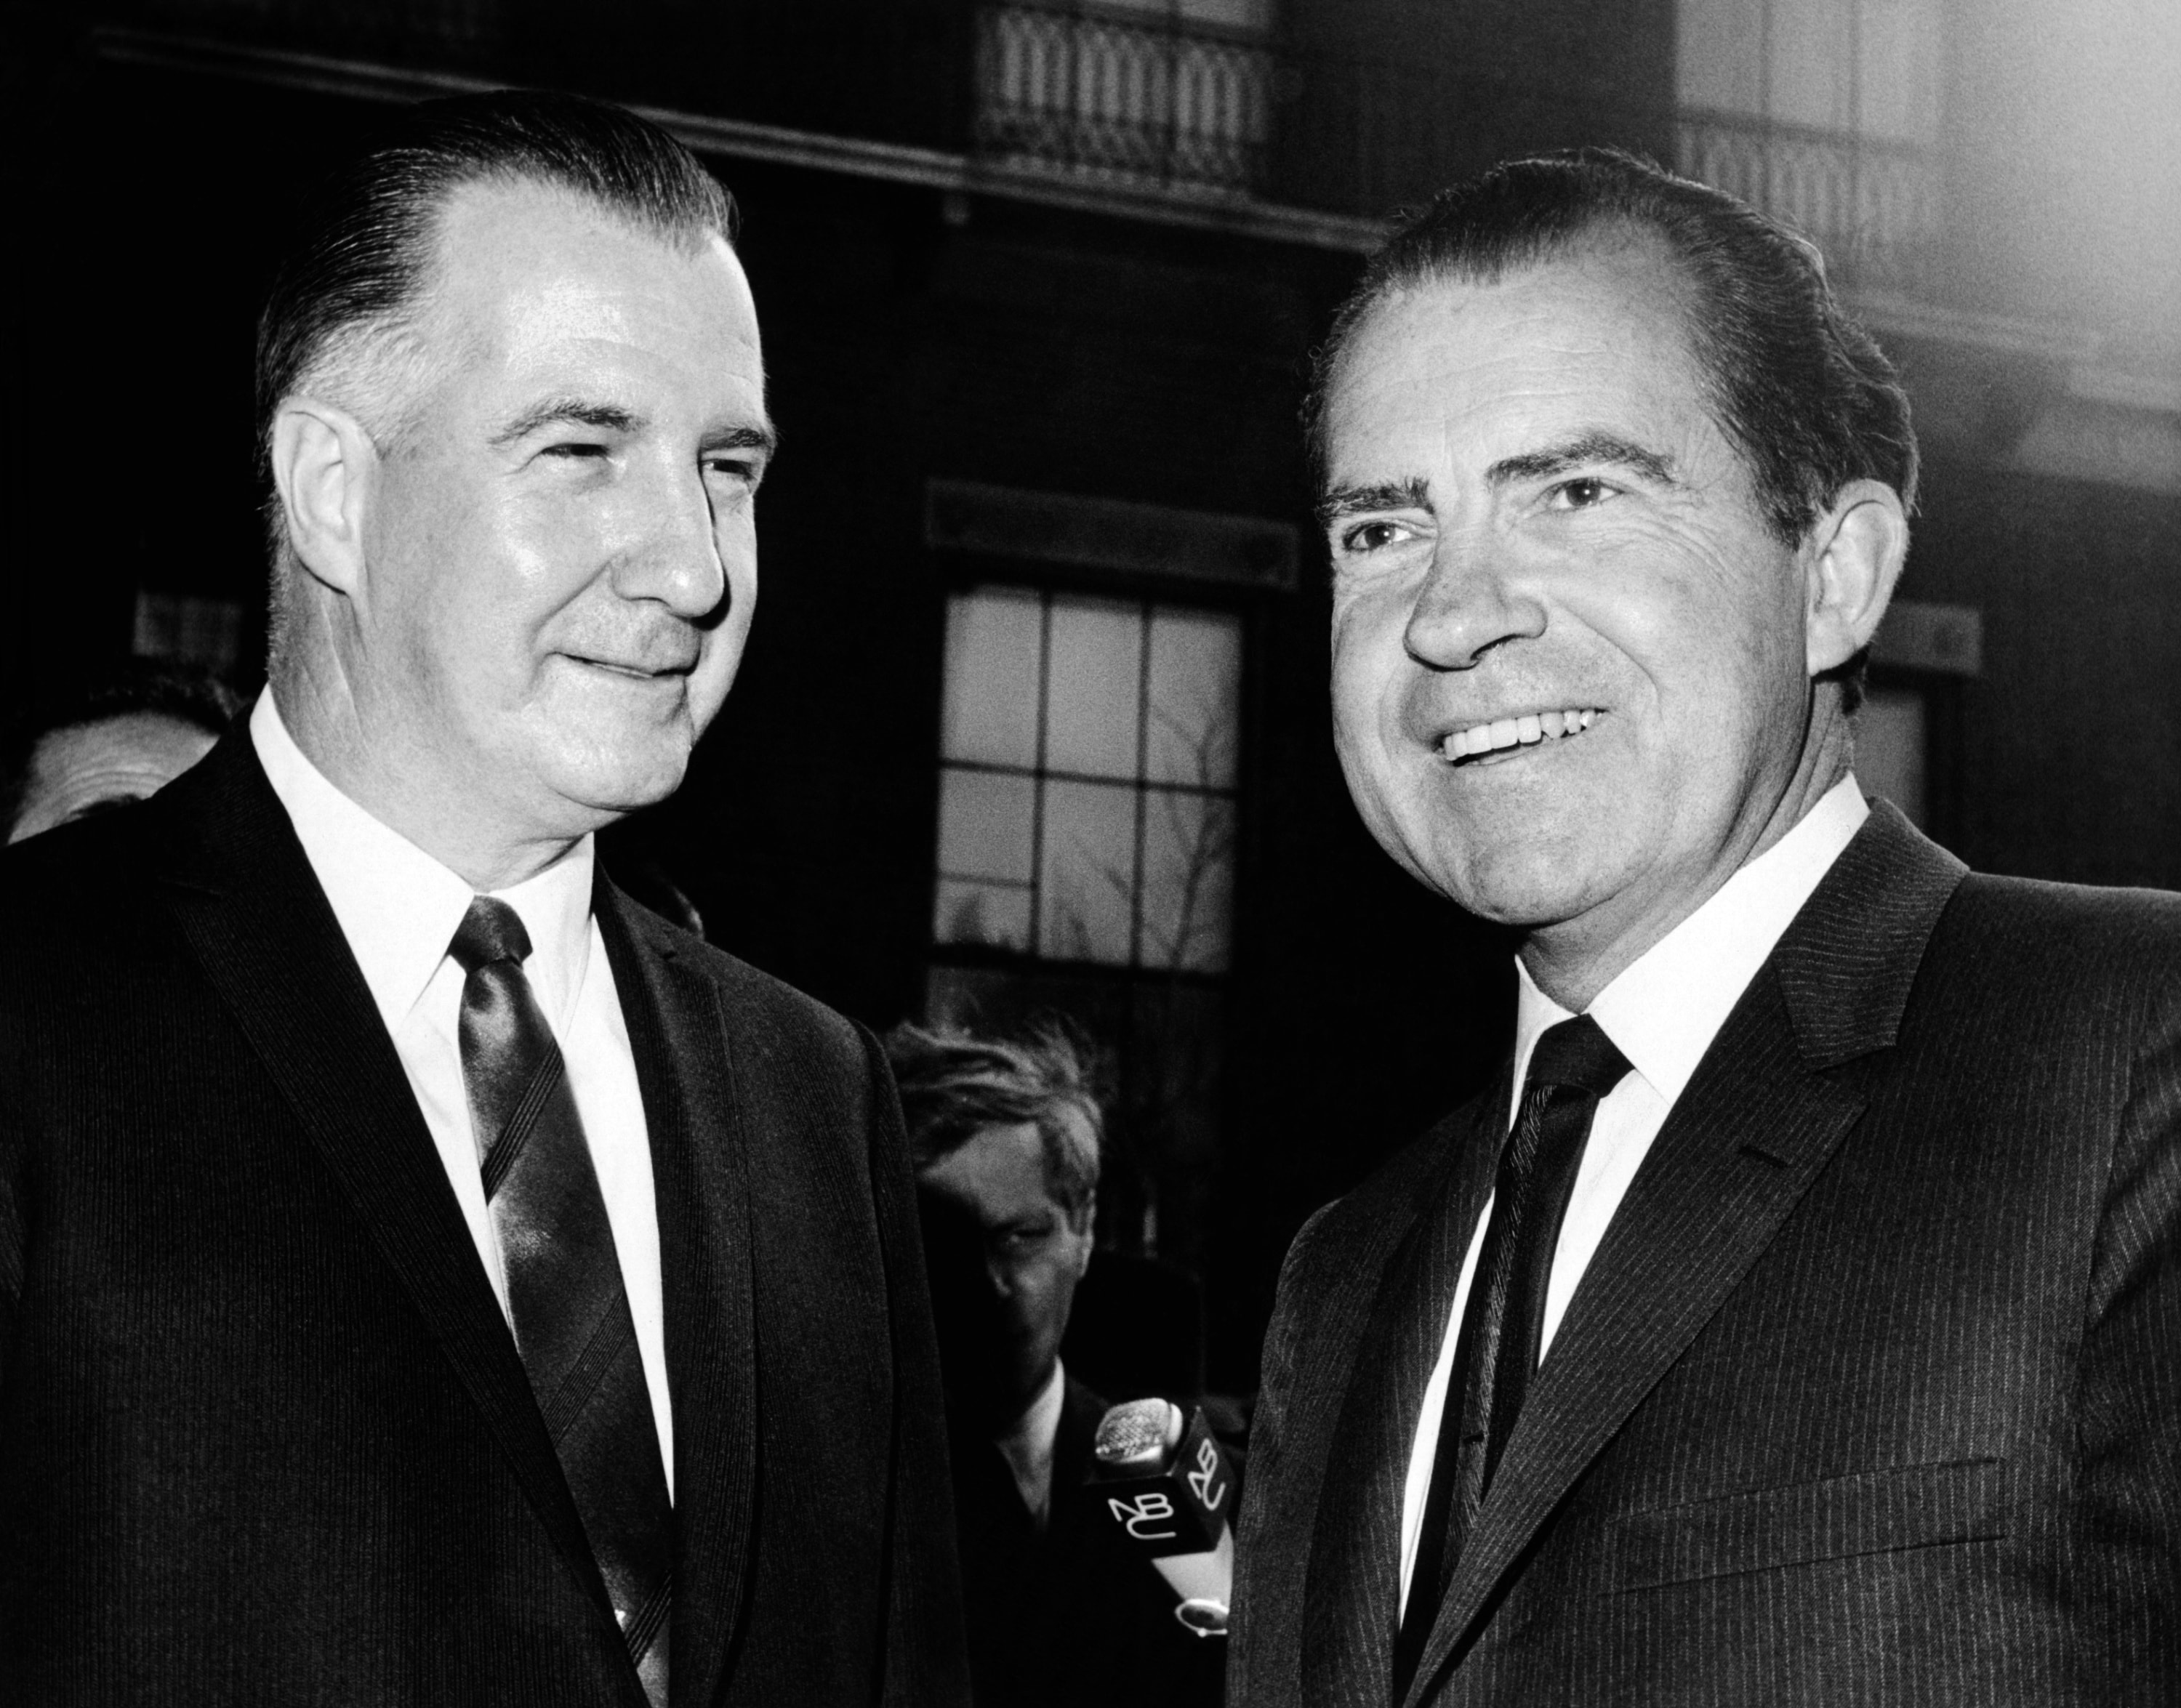 Insieme a Spiro Agnew, vicepresidente di Nixon dal 1969 al 1973